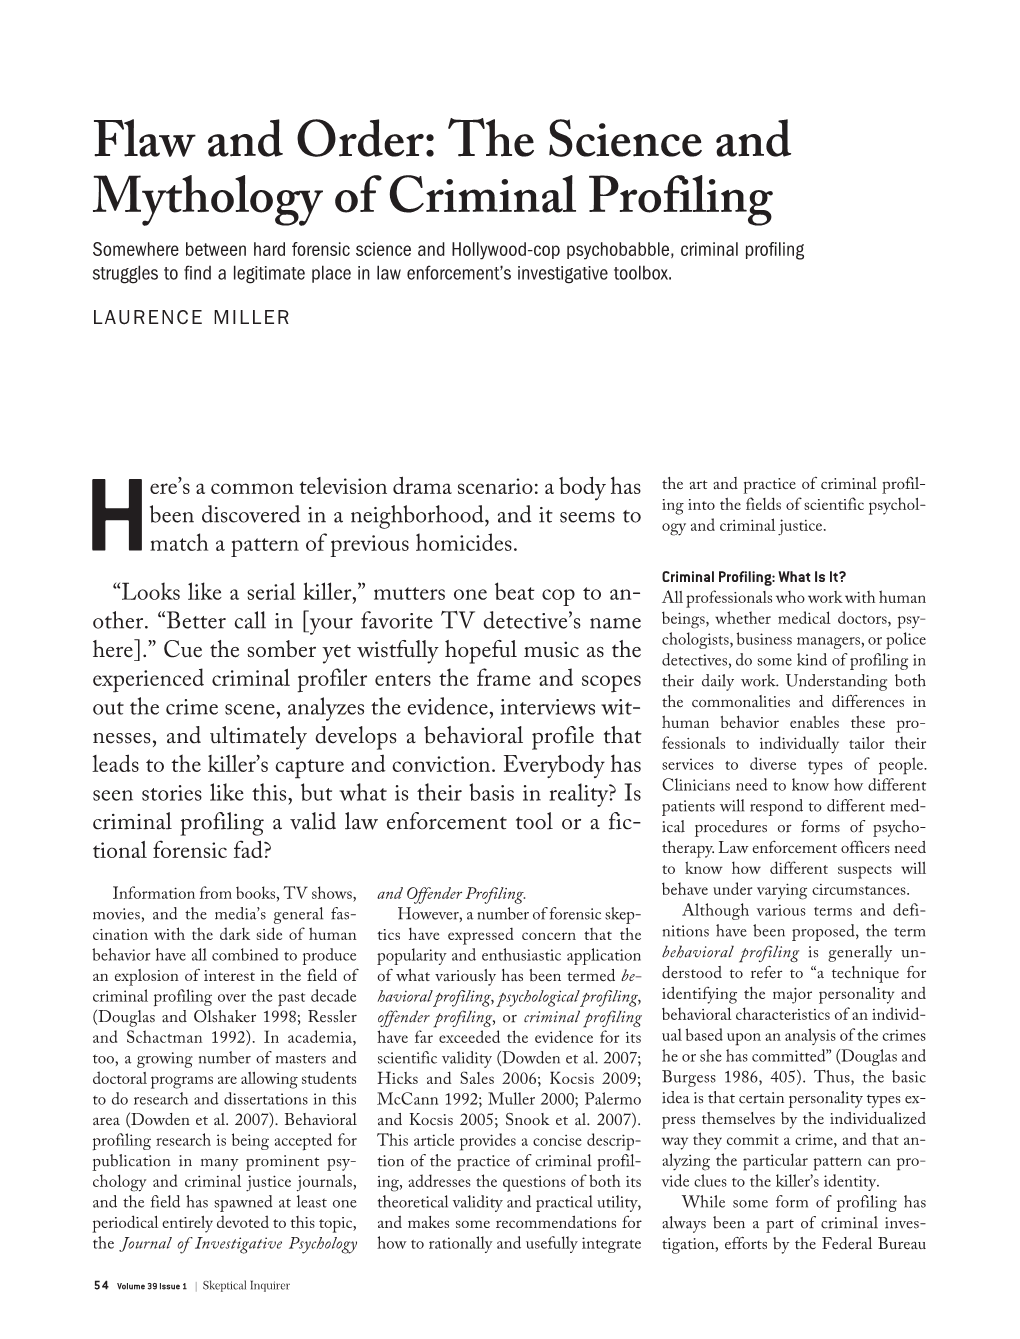 The Science and Mythology of Criminal Profiling